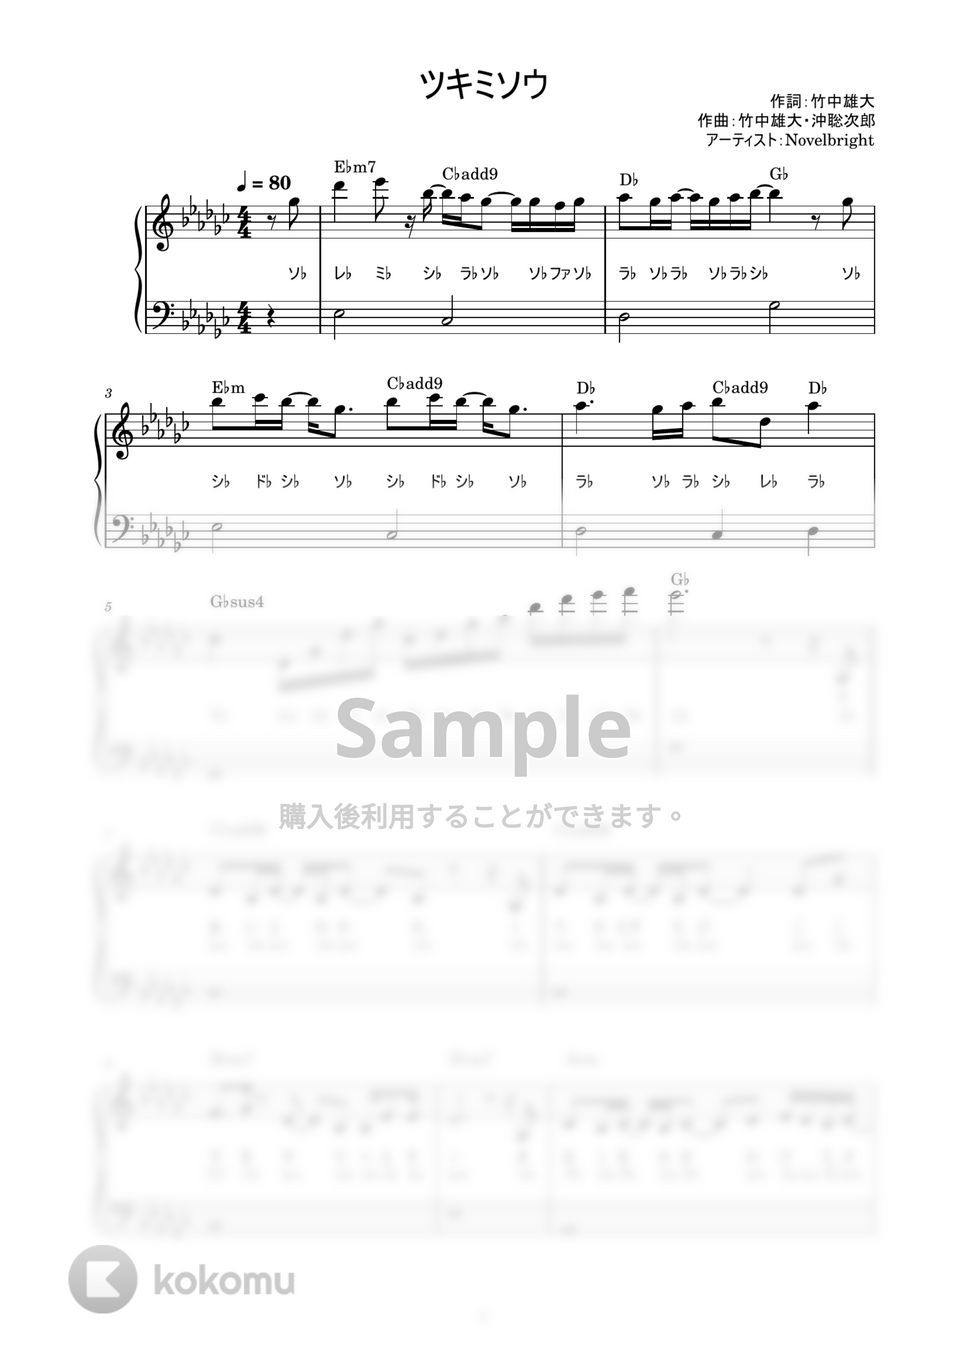 Novelbright - ツキミソウ (かんたん / 歌詞付き / ドレミ付き / 初心者) by piano.tokyo